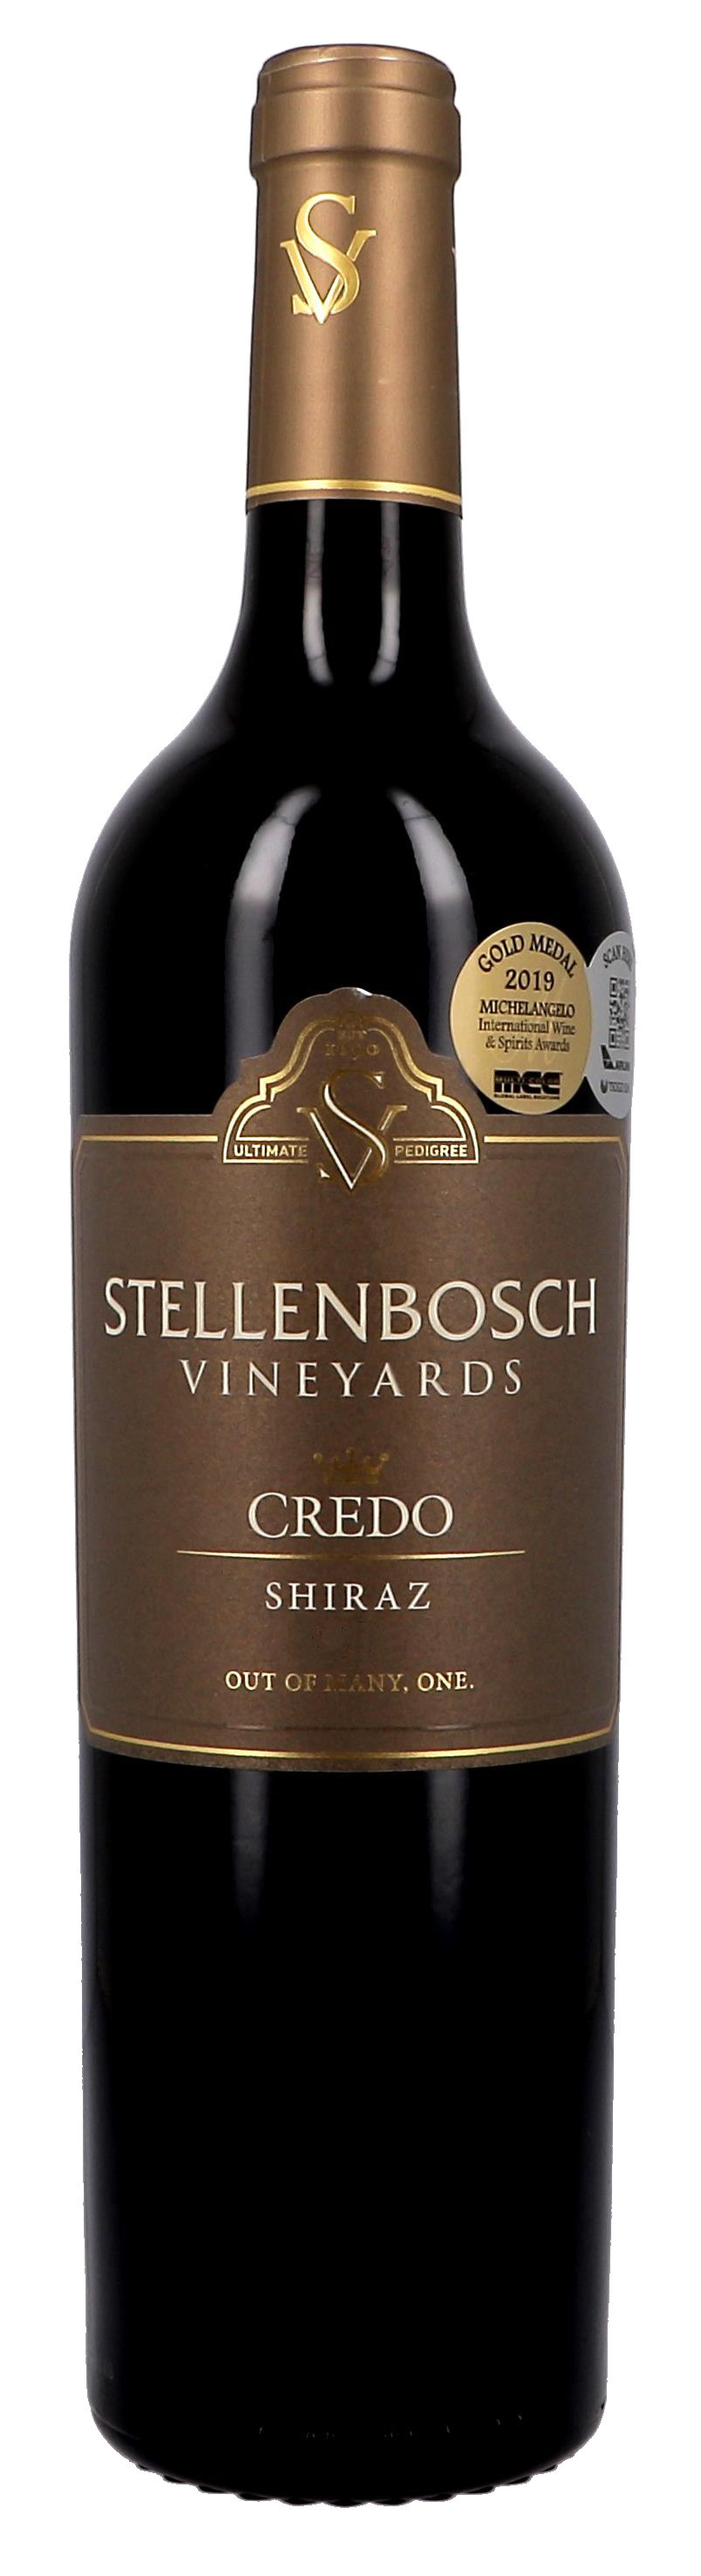 Credo Shiraz 75cl Stellenbosch Vineyards (Wijnen)